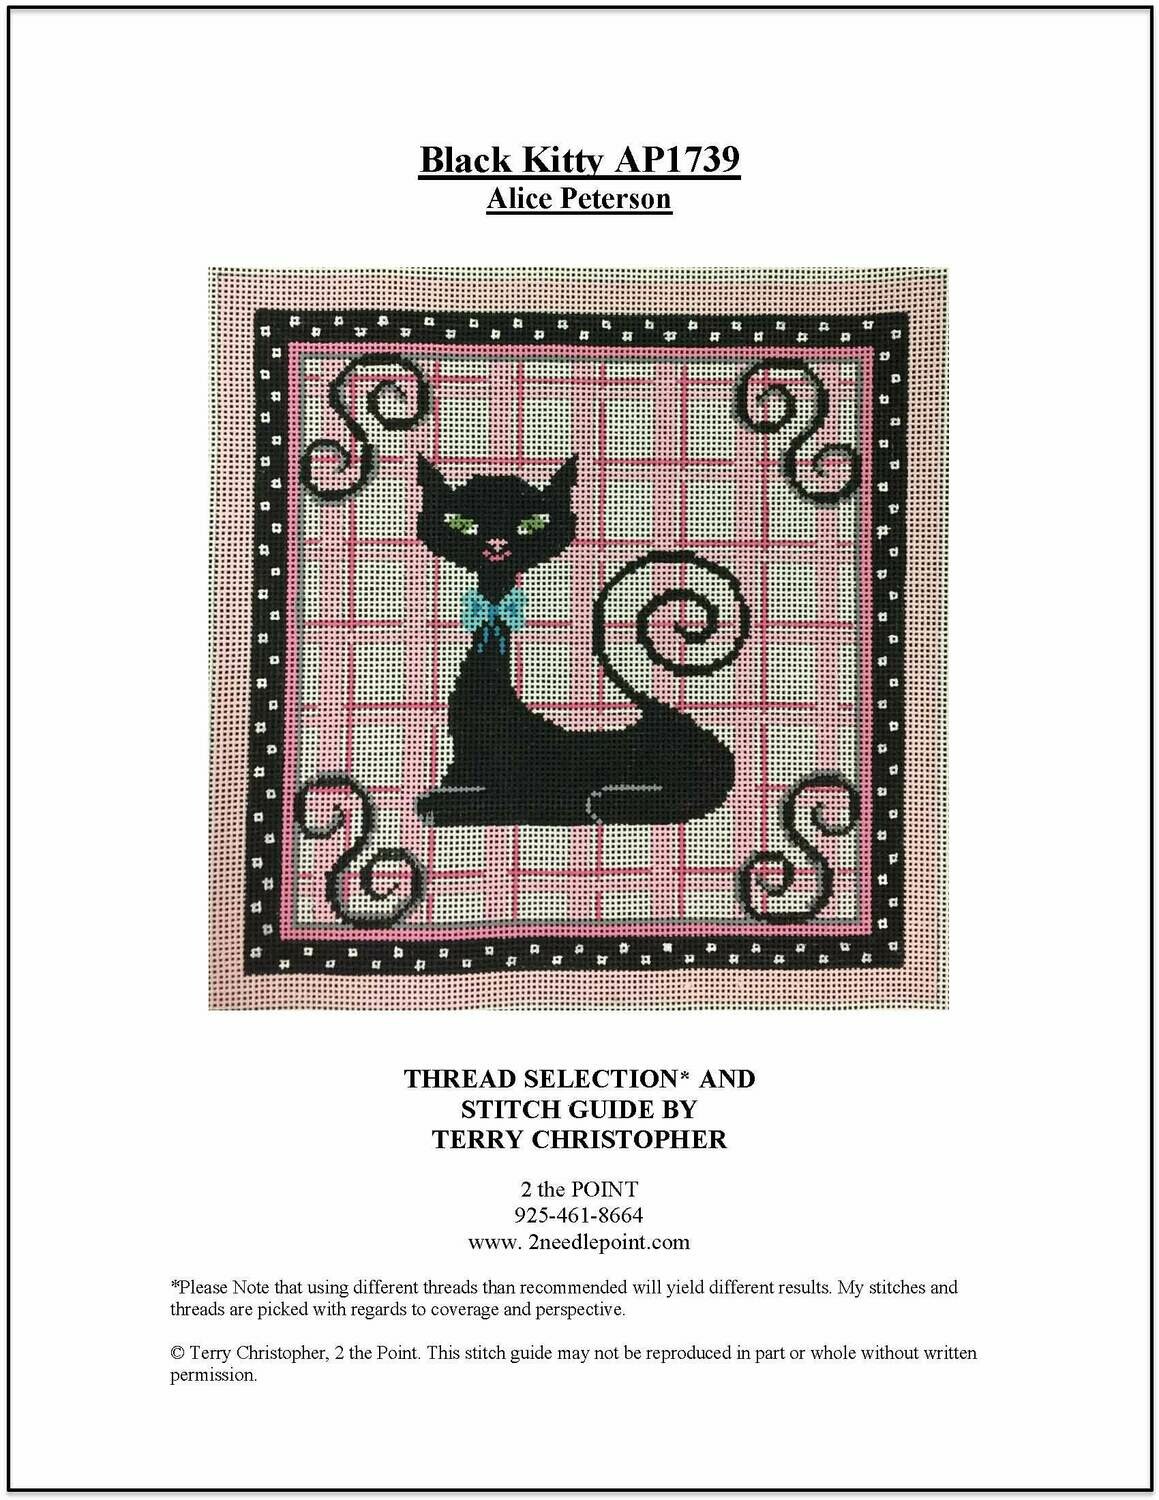 Alice Peterson, Black Kitty Stitch Guide AP1739